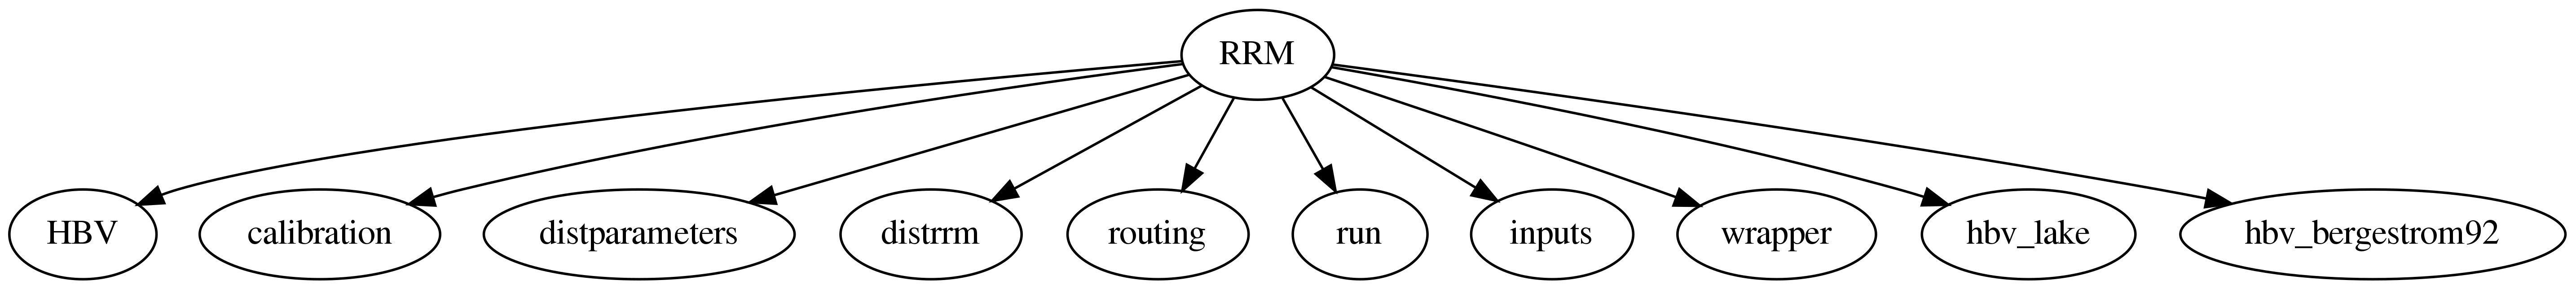 digraph Linking {
RRM -> HBV;
RRM -> calibration;
RRM -> distparameters;
RRM -> distrrm;
RRM -> routing;
RRM -> run;
RRM -> inputs;
RRM -> wrapper;
RRM -> hbv_lake;
RRM -> hbv_bergestrom92;
dpi=400;
}